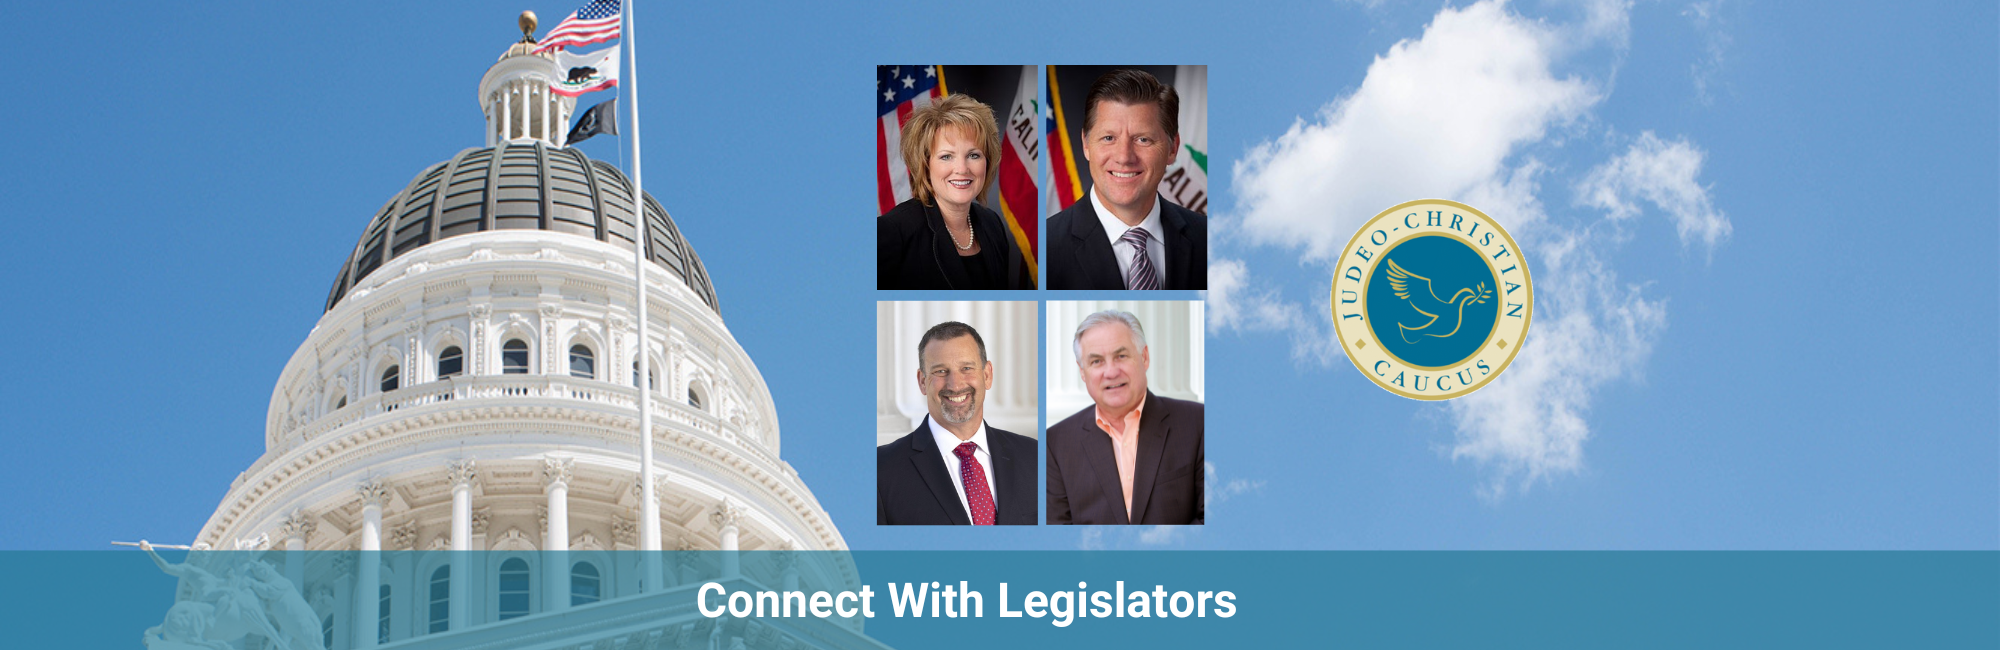 Connect With Legislators Banner 7.27.23.png